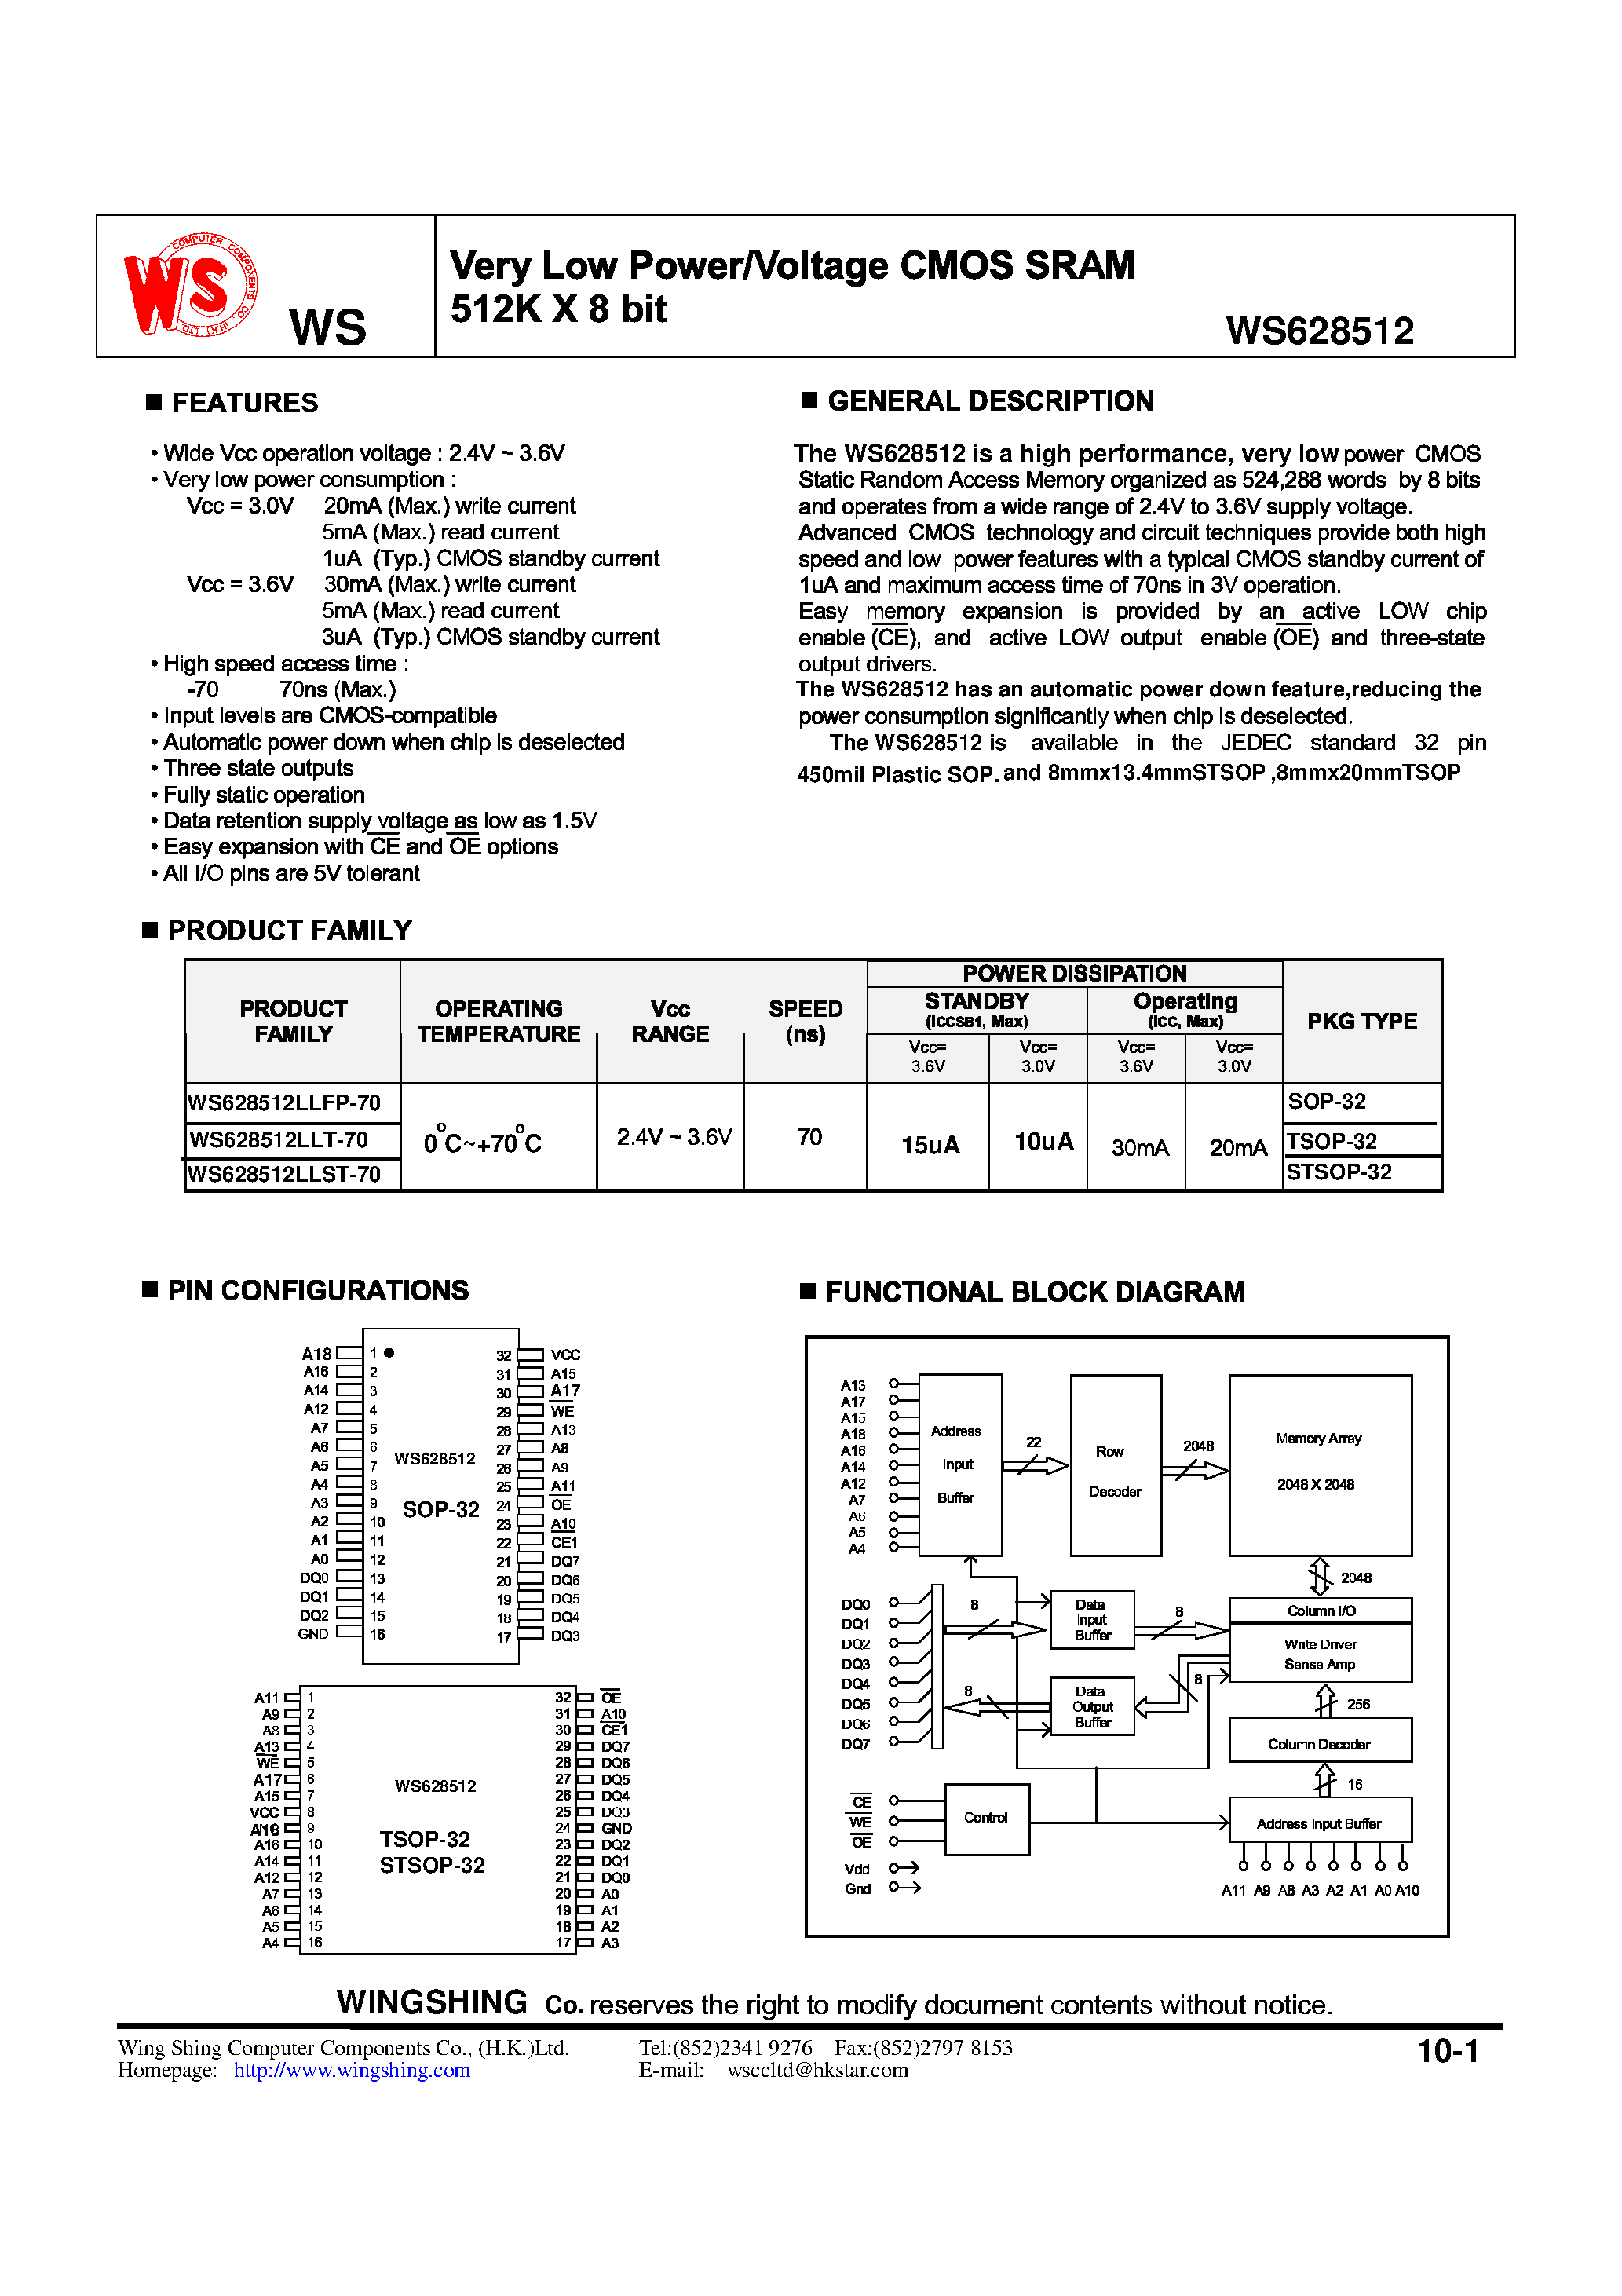 Datasheet WS628512LLFP-70 - Very Low Power/Voltage CMOS SRAM 512K X 8 bit page 1